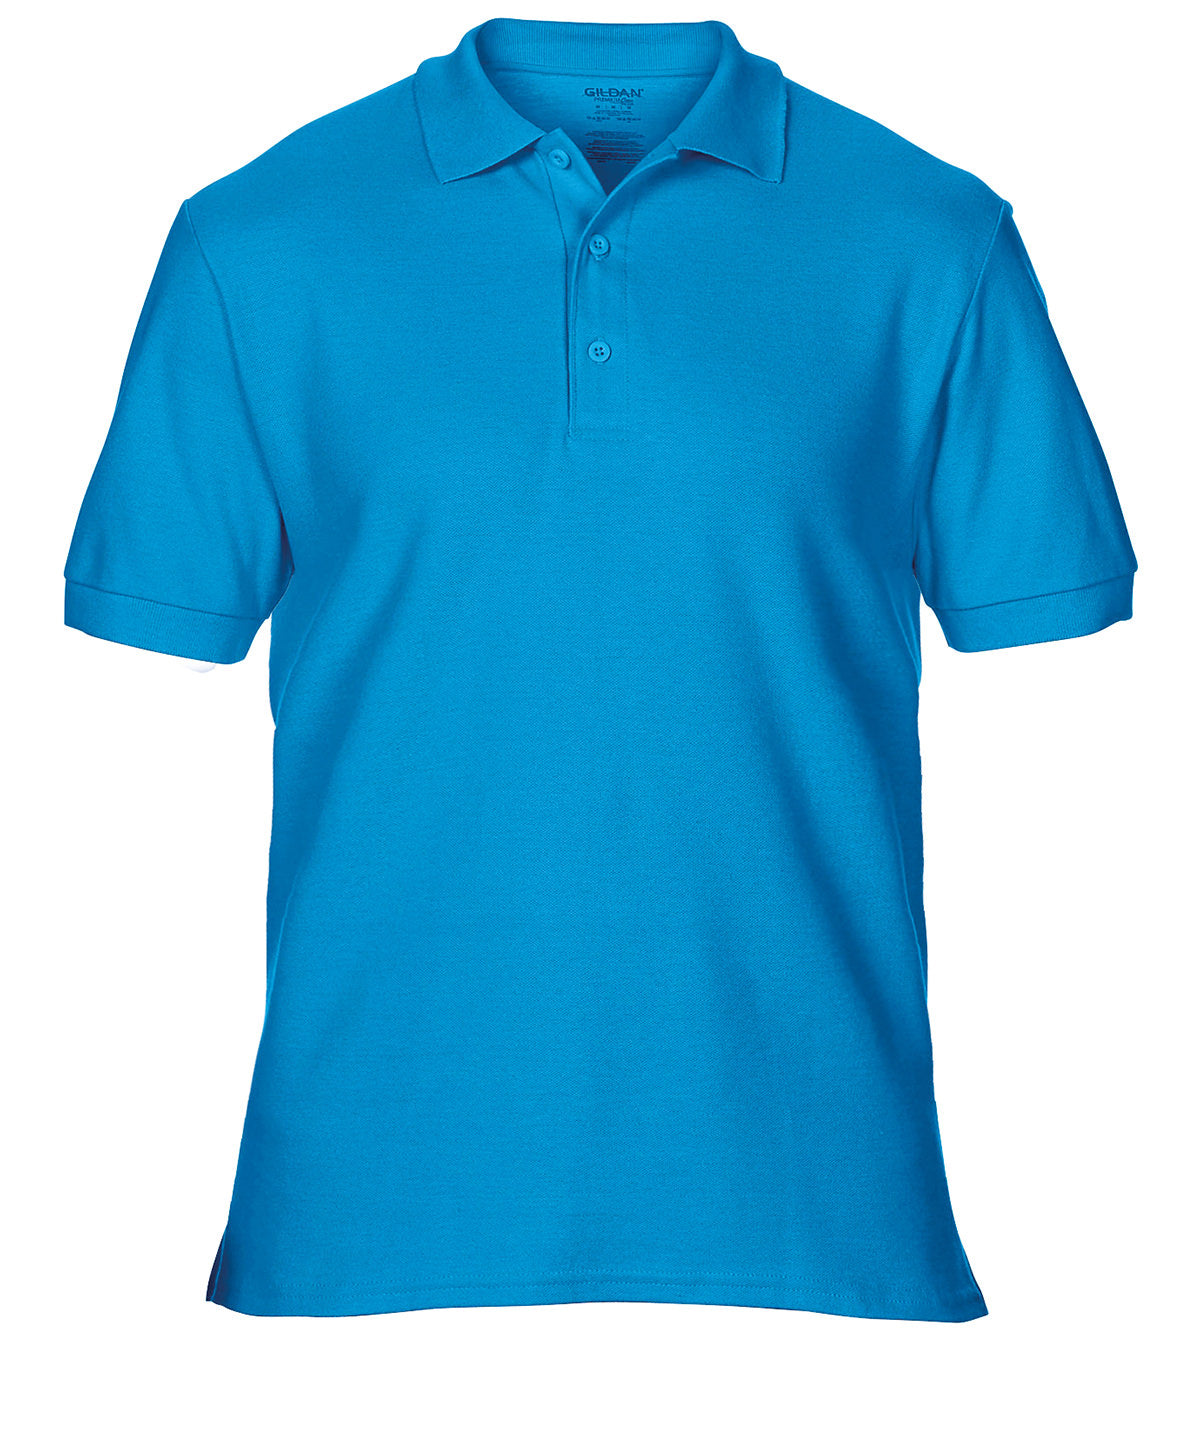 Personalised Polo Shirts - Dark Grey Gildan Hammer® piqué sport shirt